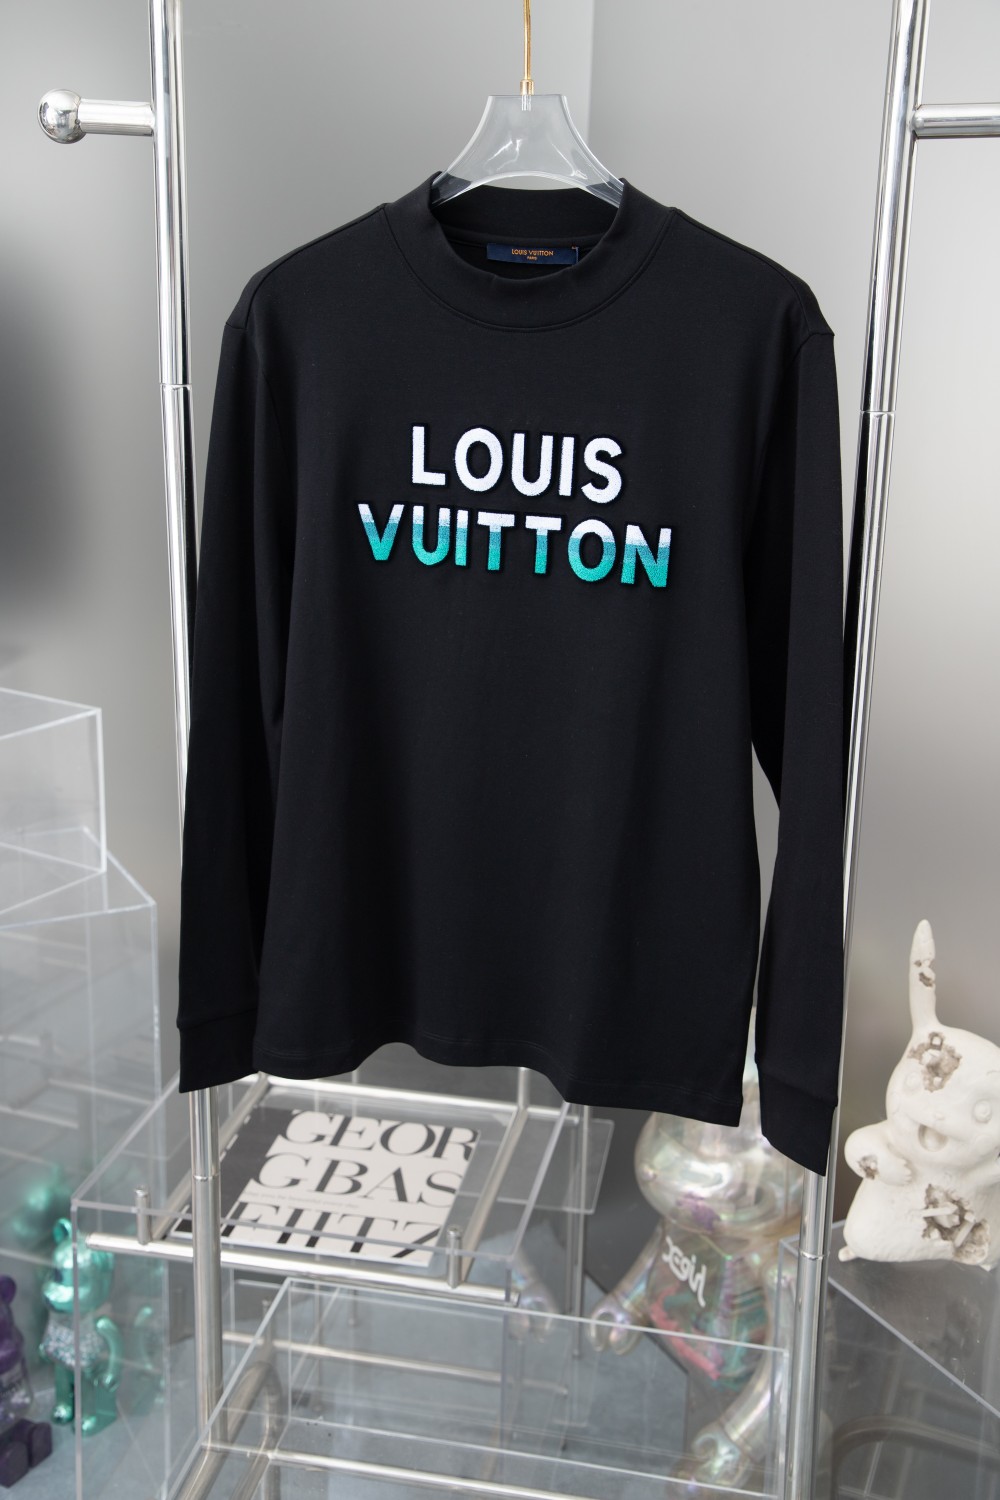 Louis Vuitton Clothing T-Shirt Black White Cotton Fall/Winter Collection Fashion Long Sleeve